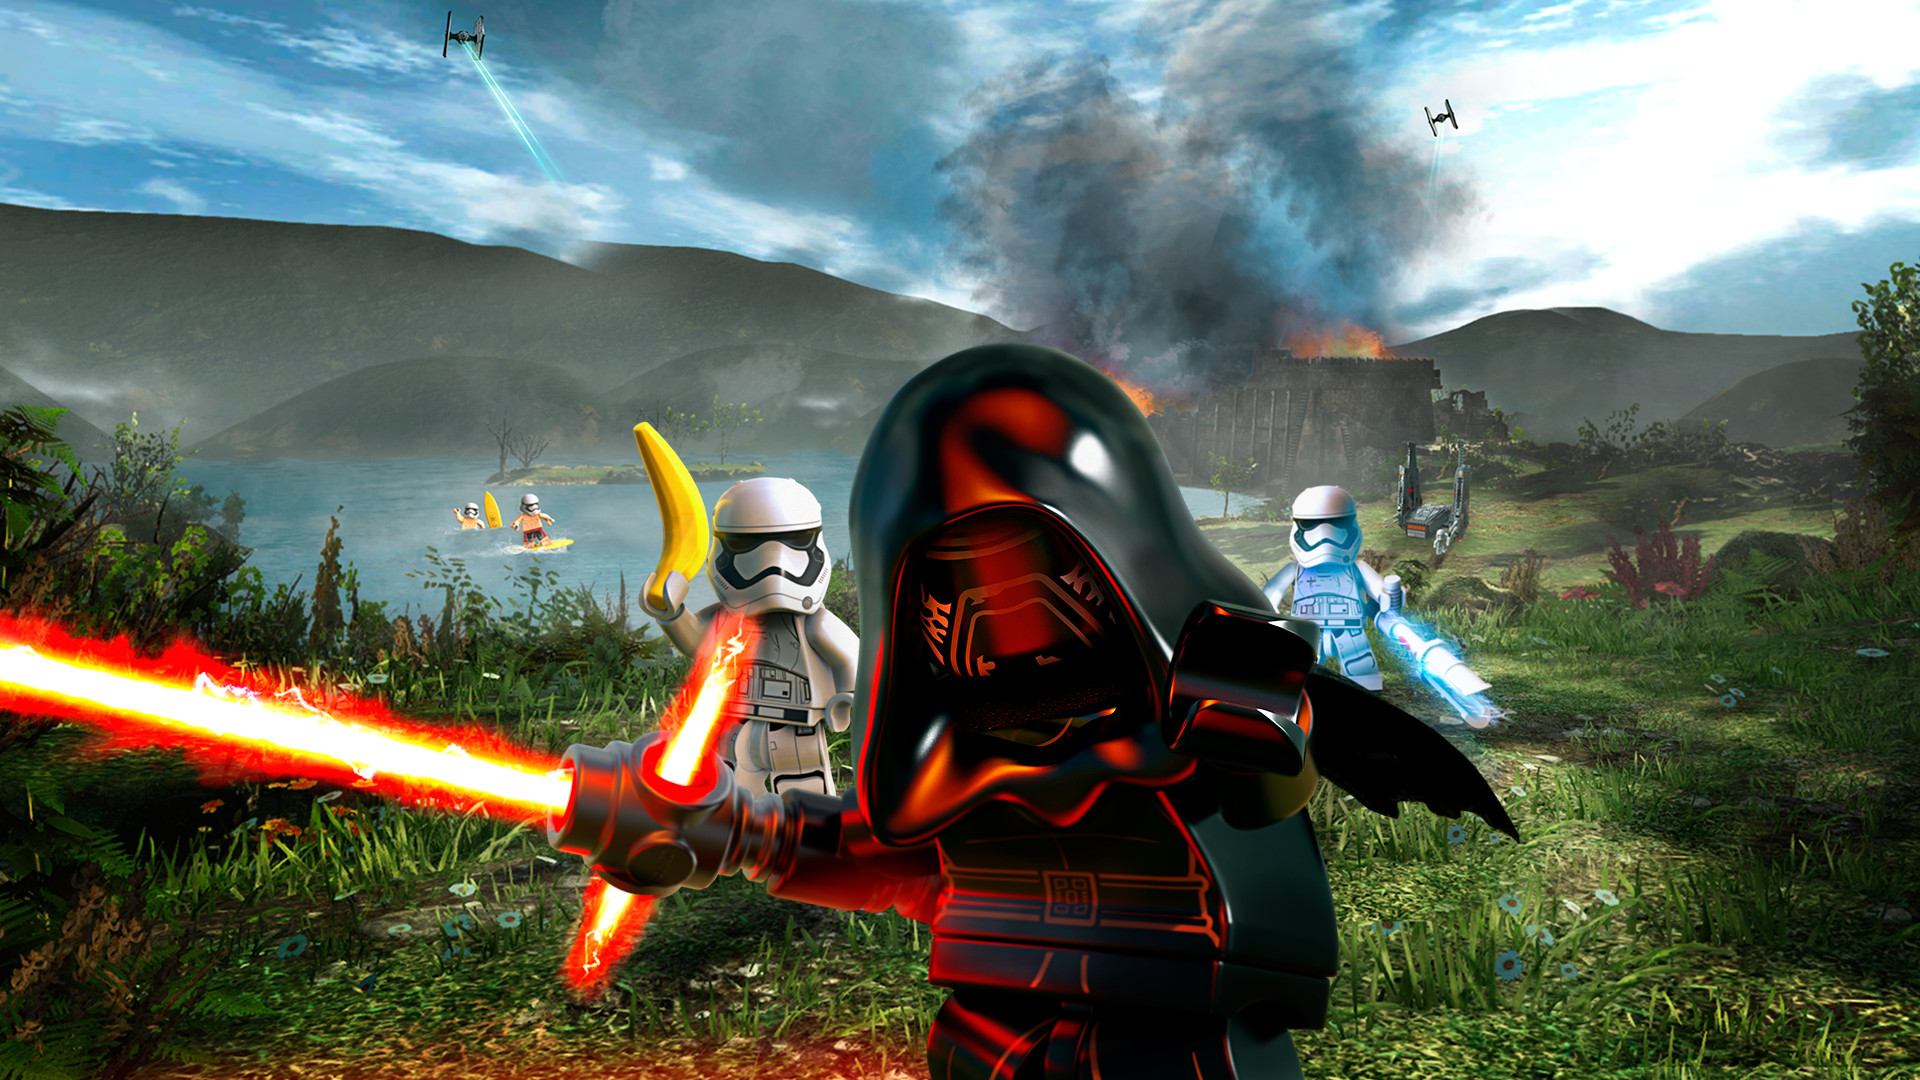 LEGO Star Wars: The Force Awakens - First Order Siege of Takodana Level Pack DLC Steam CD Key, $2.25